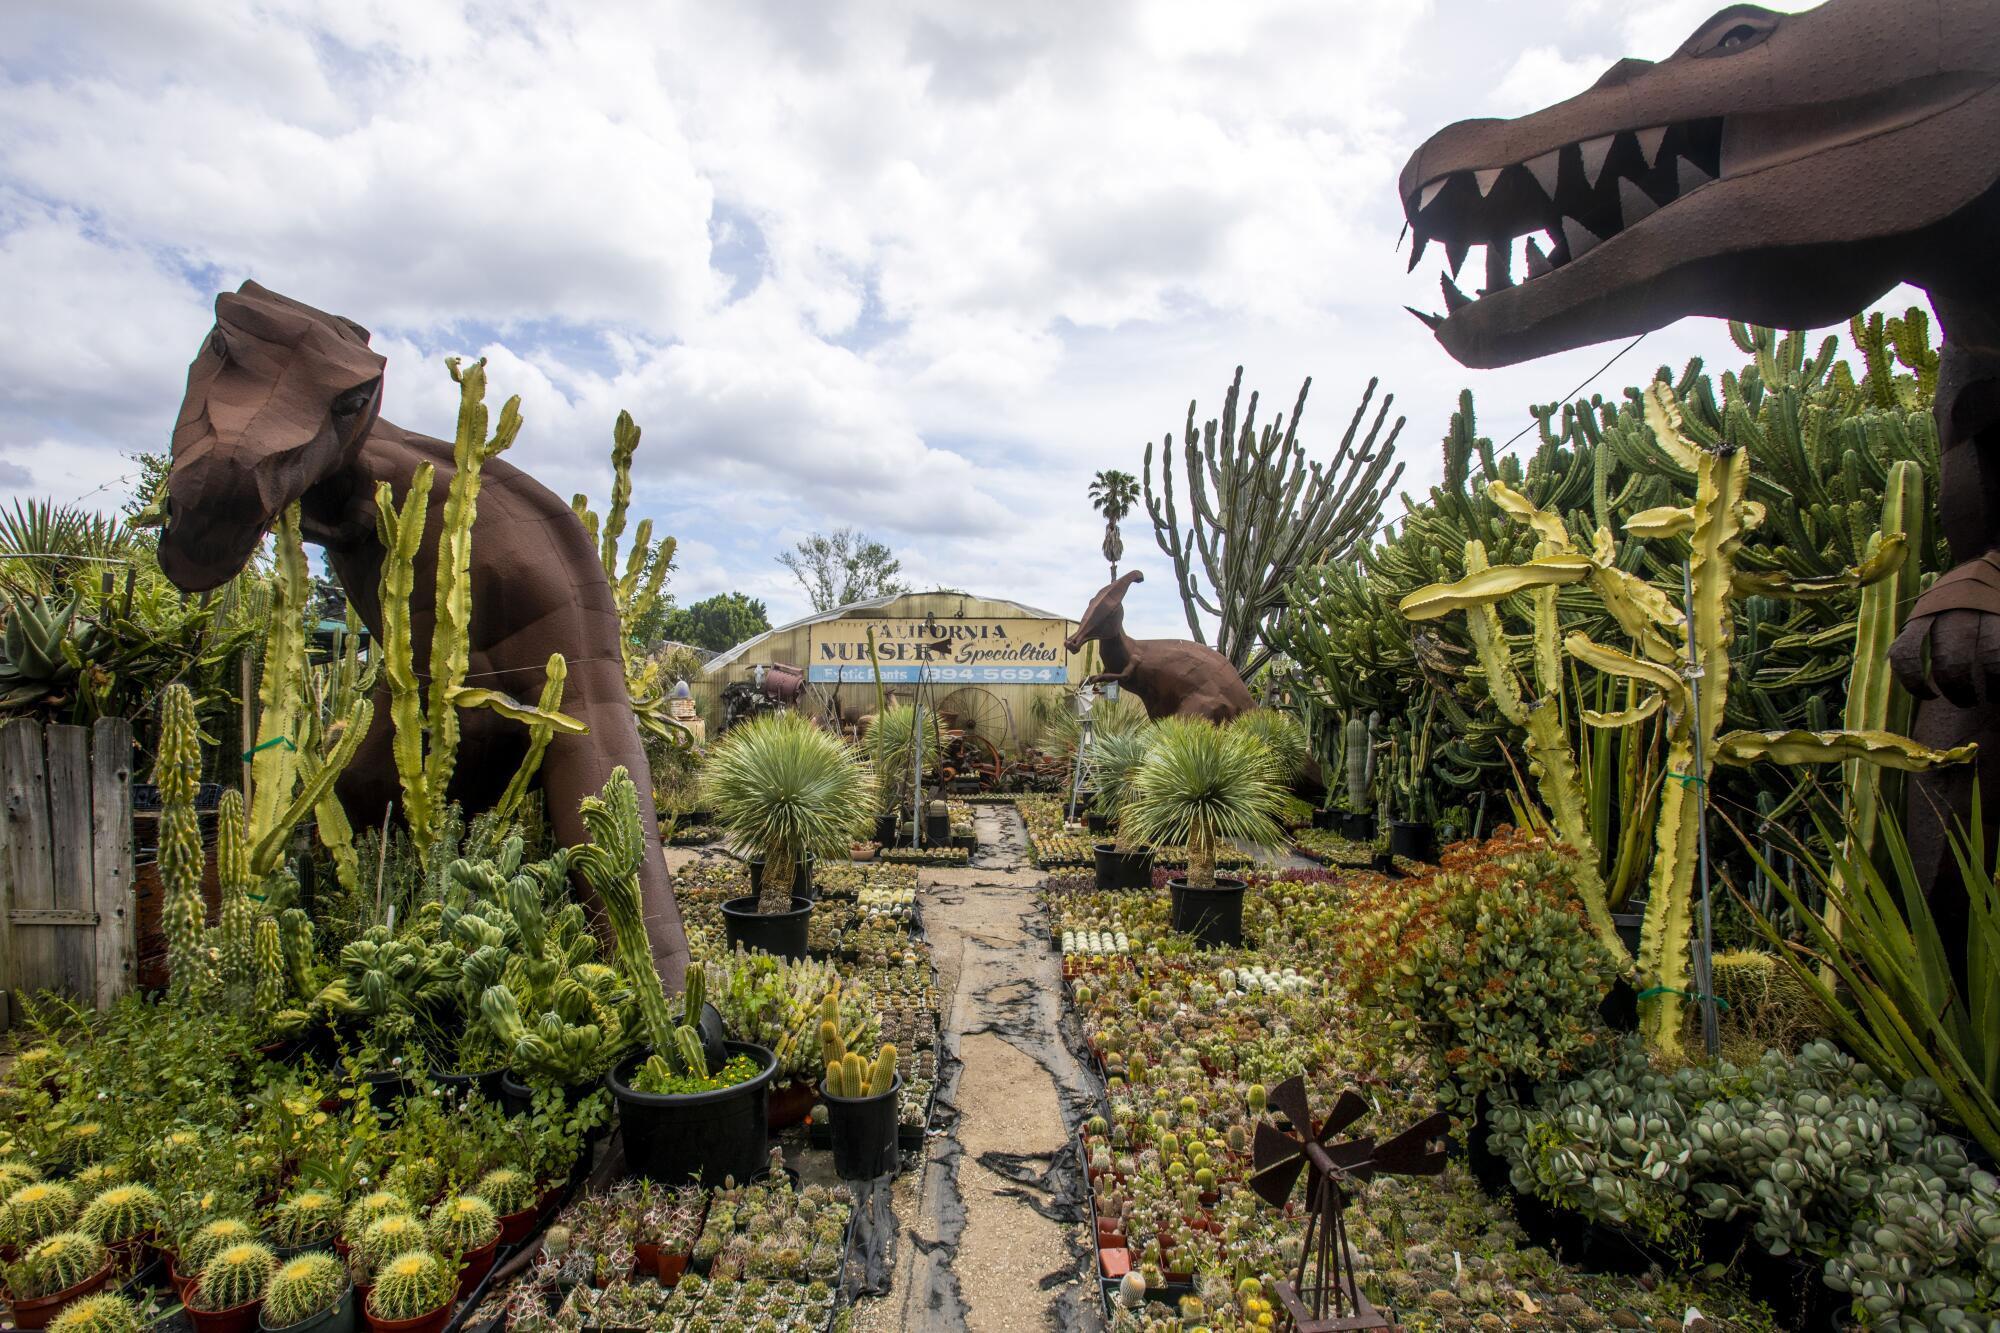 Metal dinosaur sculptures stand among cactuses